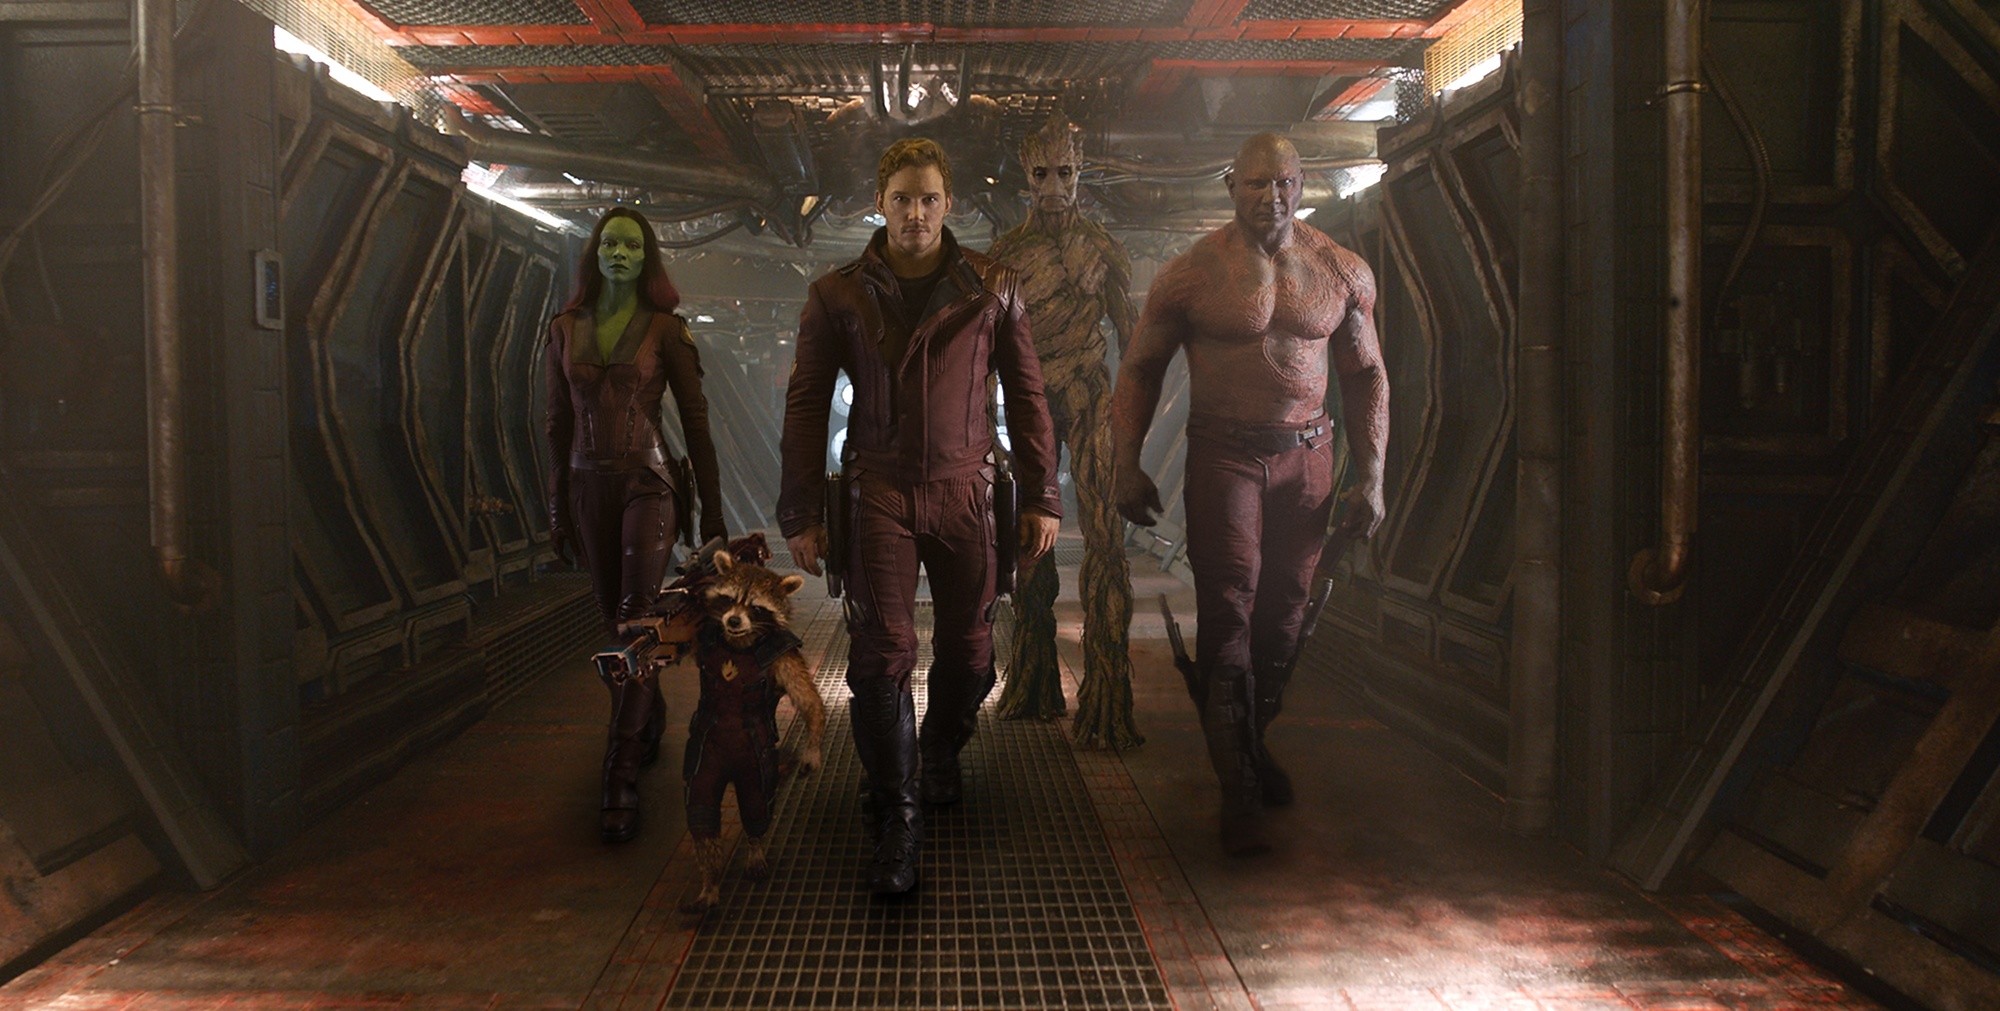 Zoe Saldana, Chris Pratt and Dave Bautista in Marvel Studios' Guardians of the Galaxy (2014)